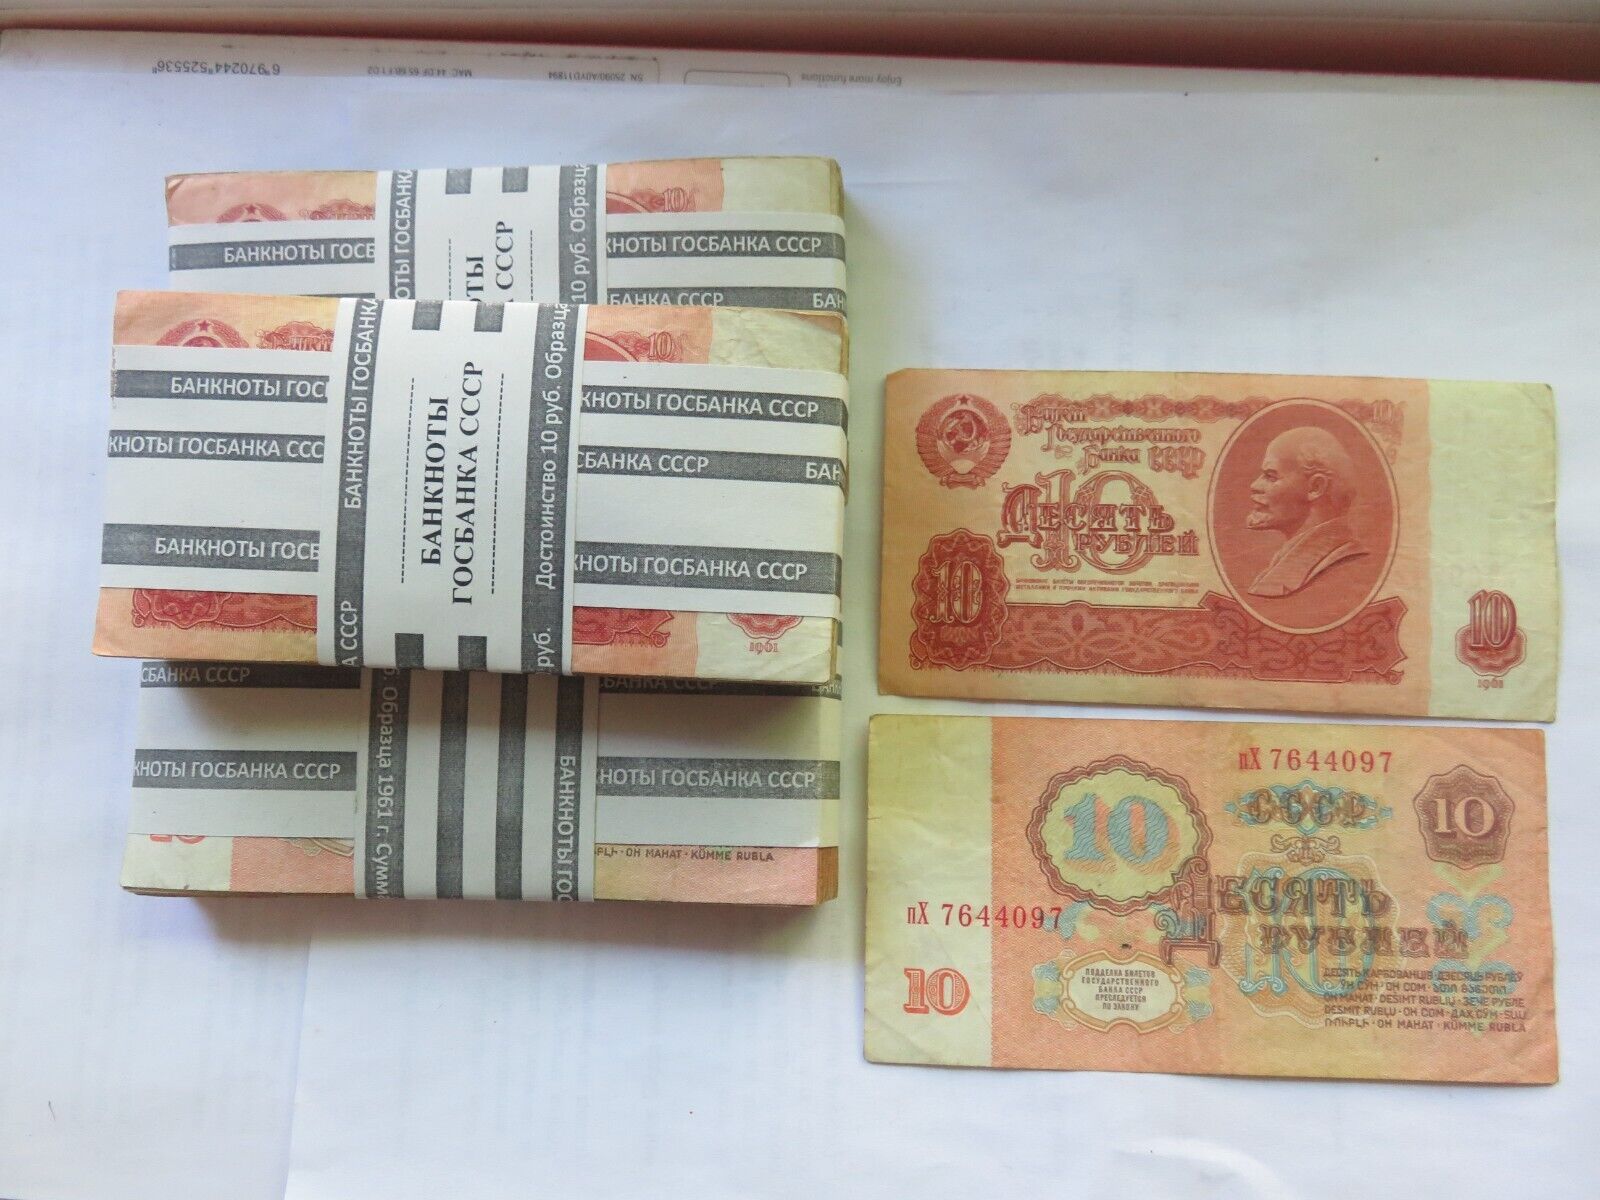 SOVIET Russia COMMUNISM propaganda Lenin a pack of 100 banknotes of 10 rubles